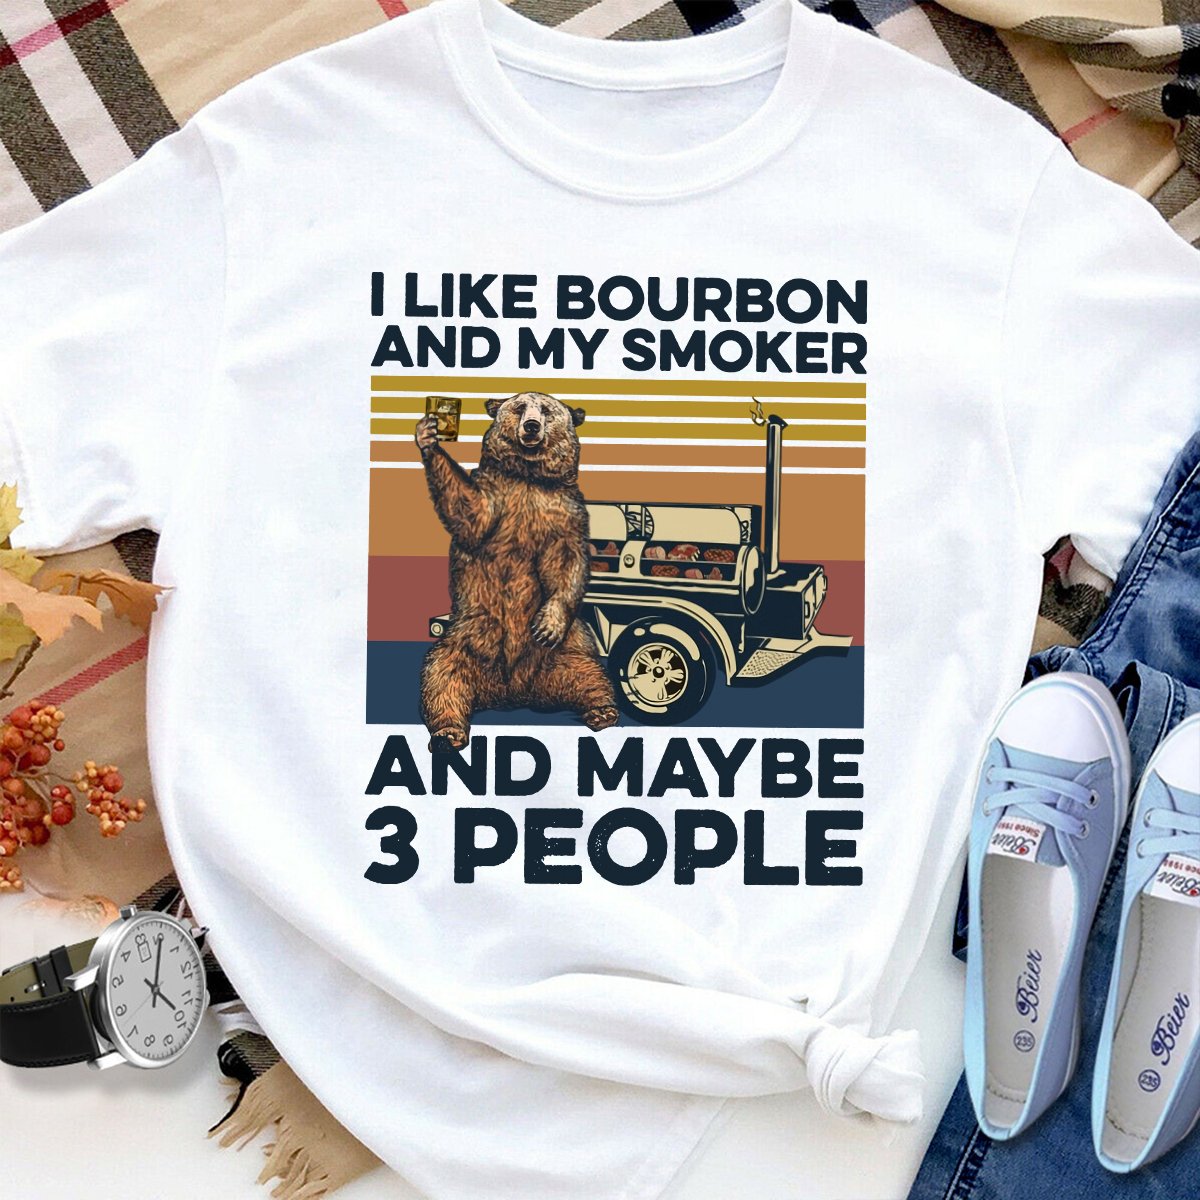 Bear O Like Bourbon And My Smoker And Maybe 3 People Women T Shirt White S-3XL